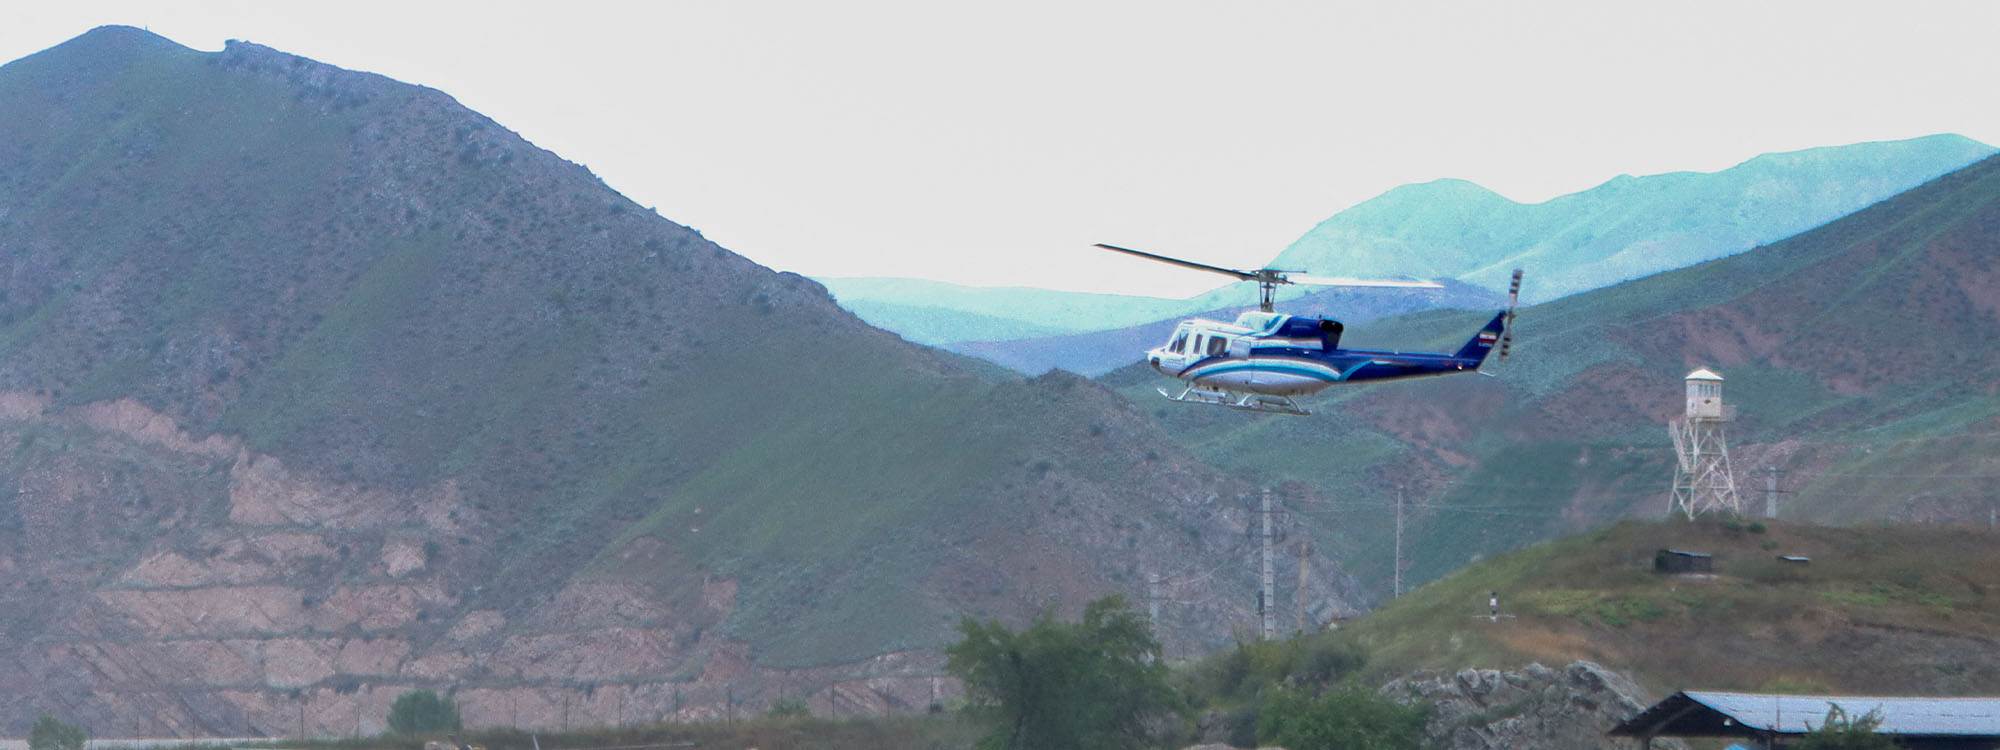 Iranian President Raisi’s helicopter has ‘hard landing’: state media